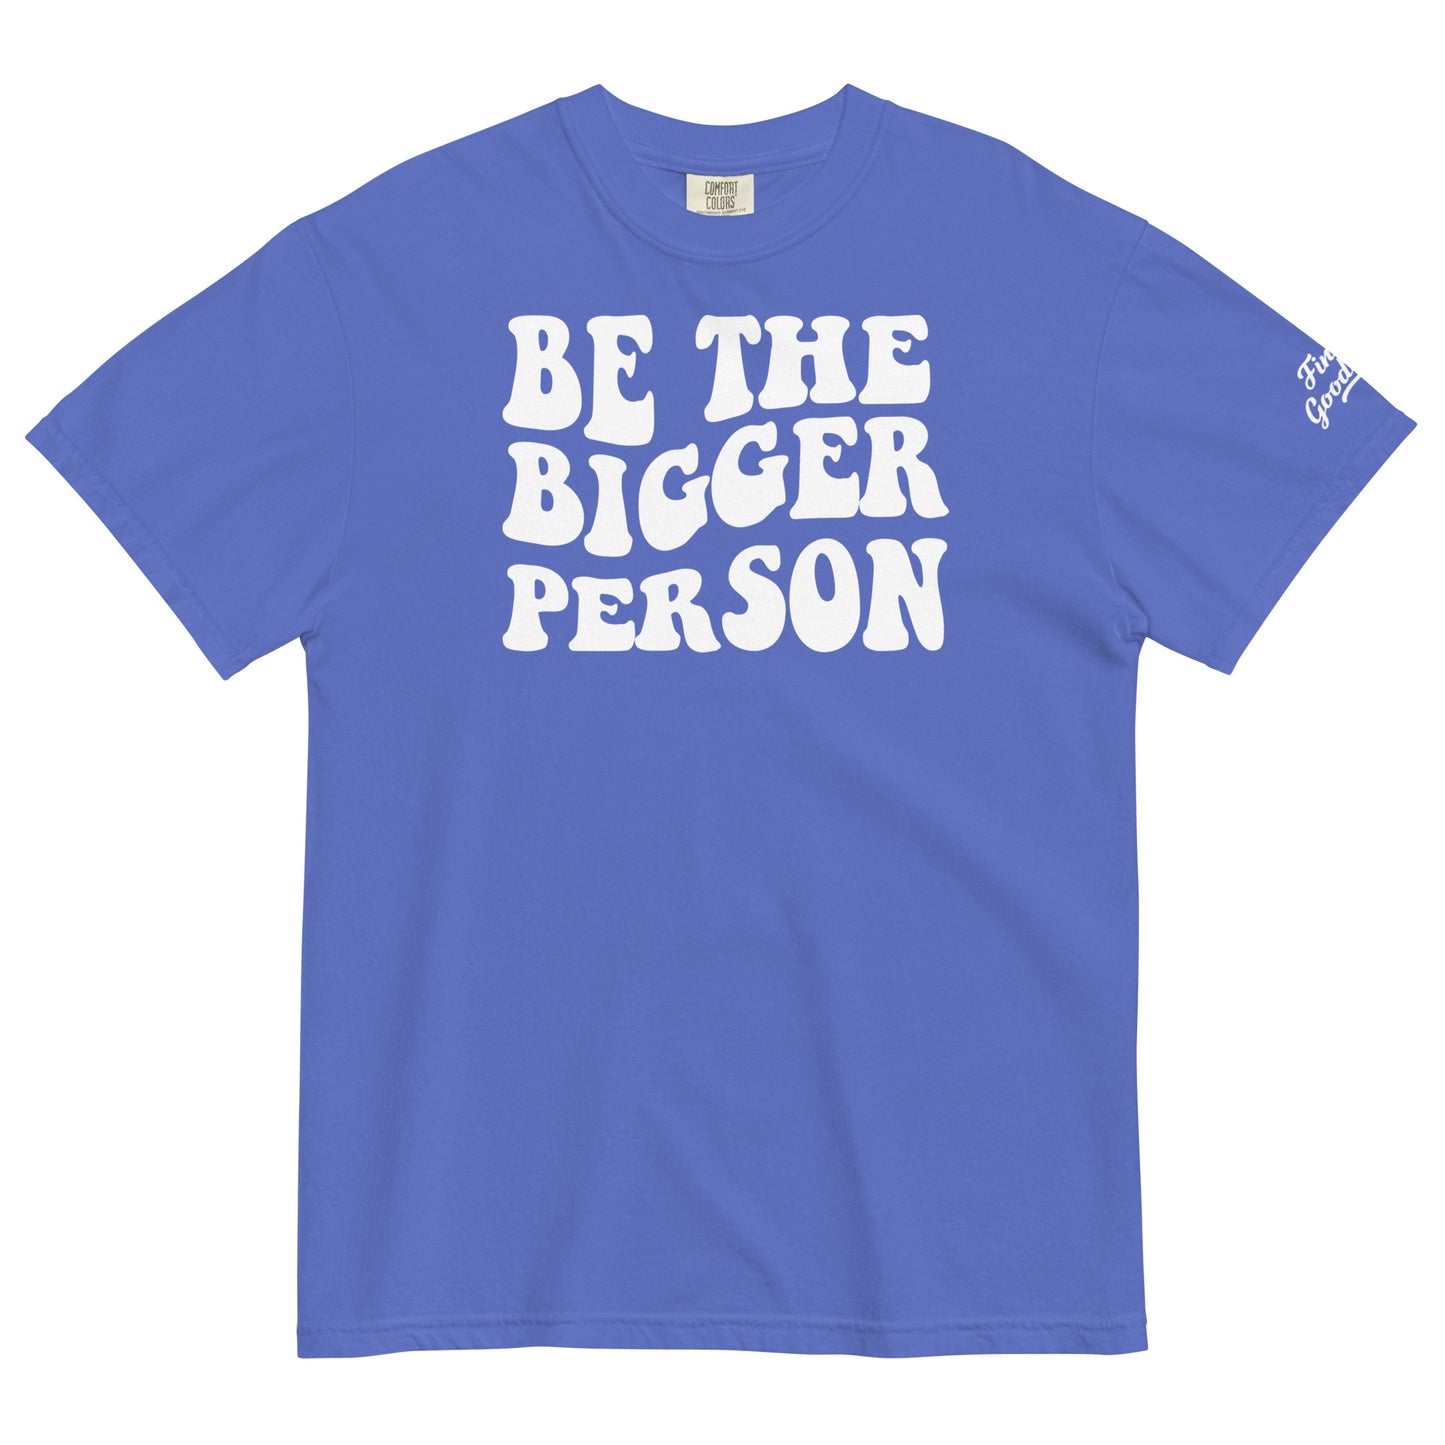 Boyfriend "Be the Bigger Person" t-shirt